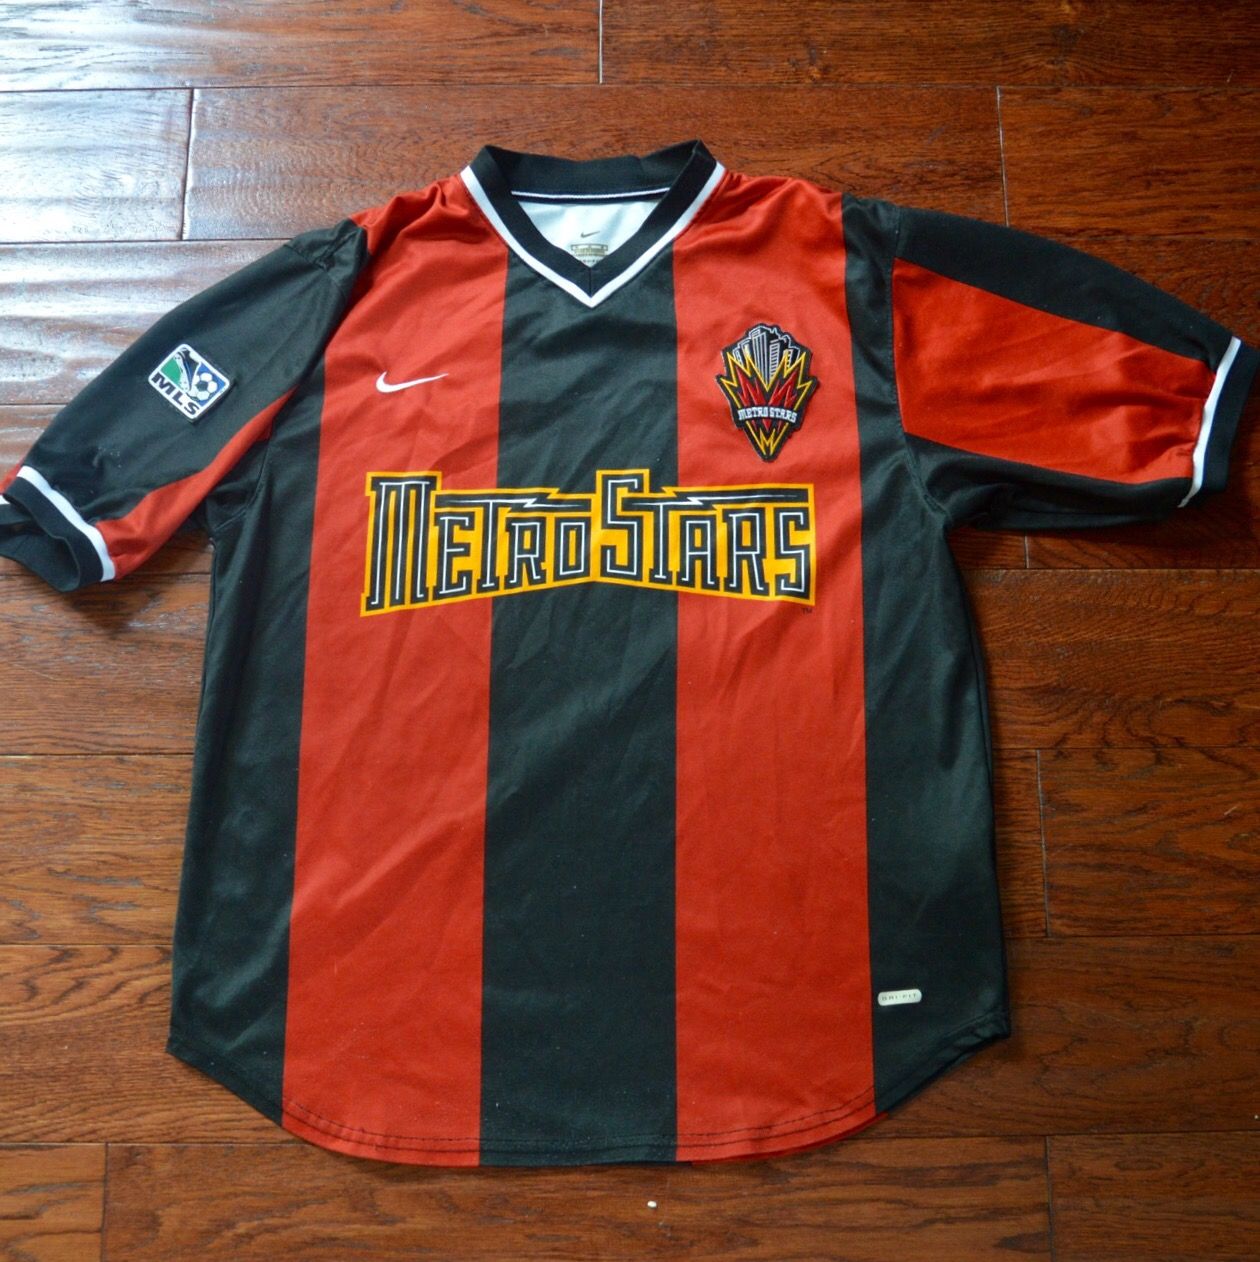 Nike Vintage 90s MetroStars MLS Soccer Jersey Size US M / EU 48-50 / 2 - 1 Preview